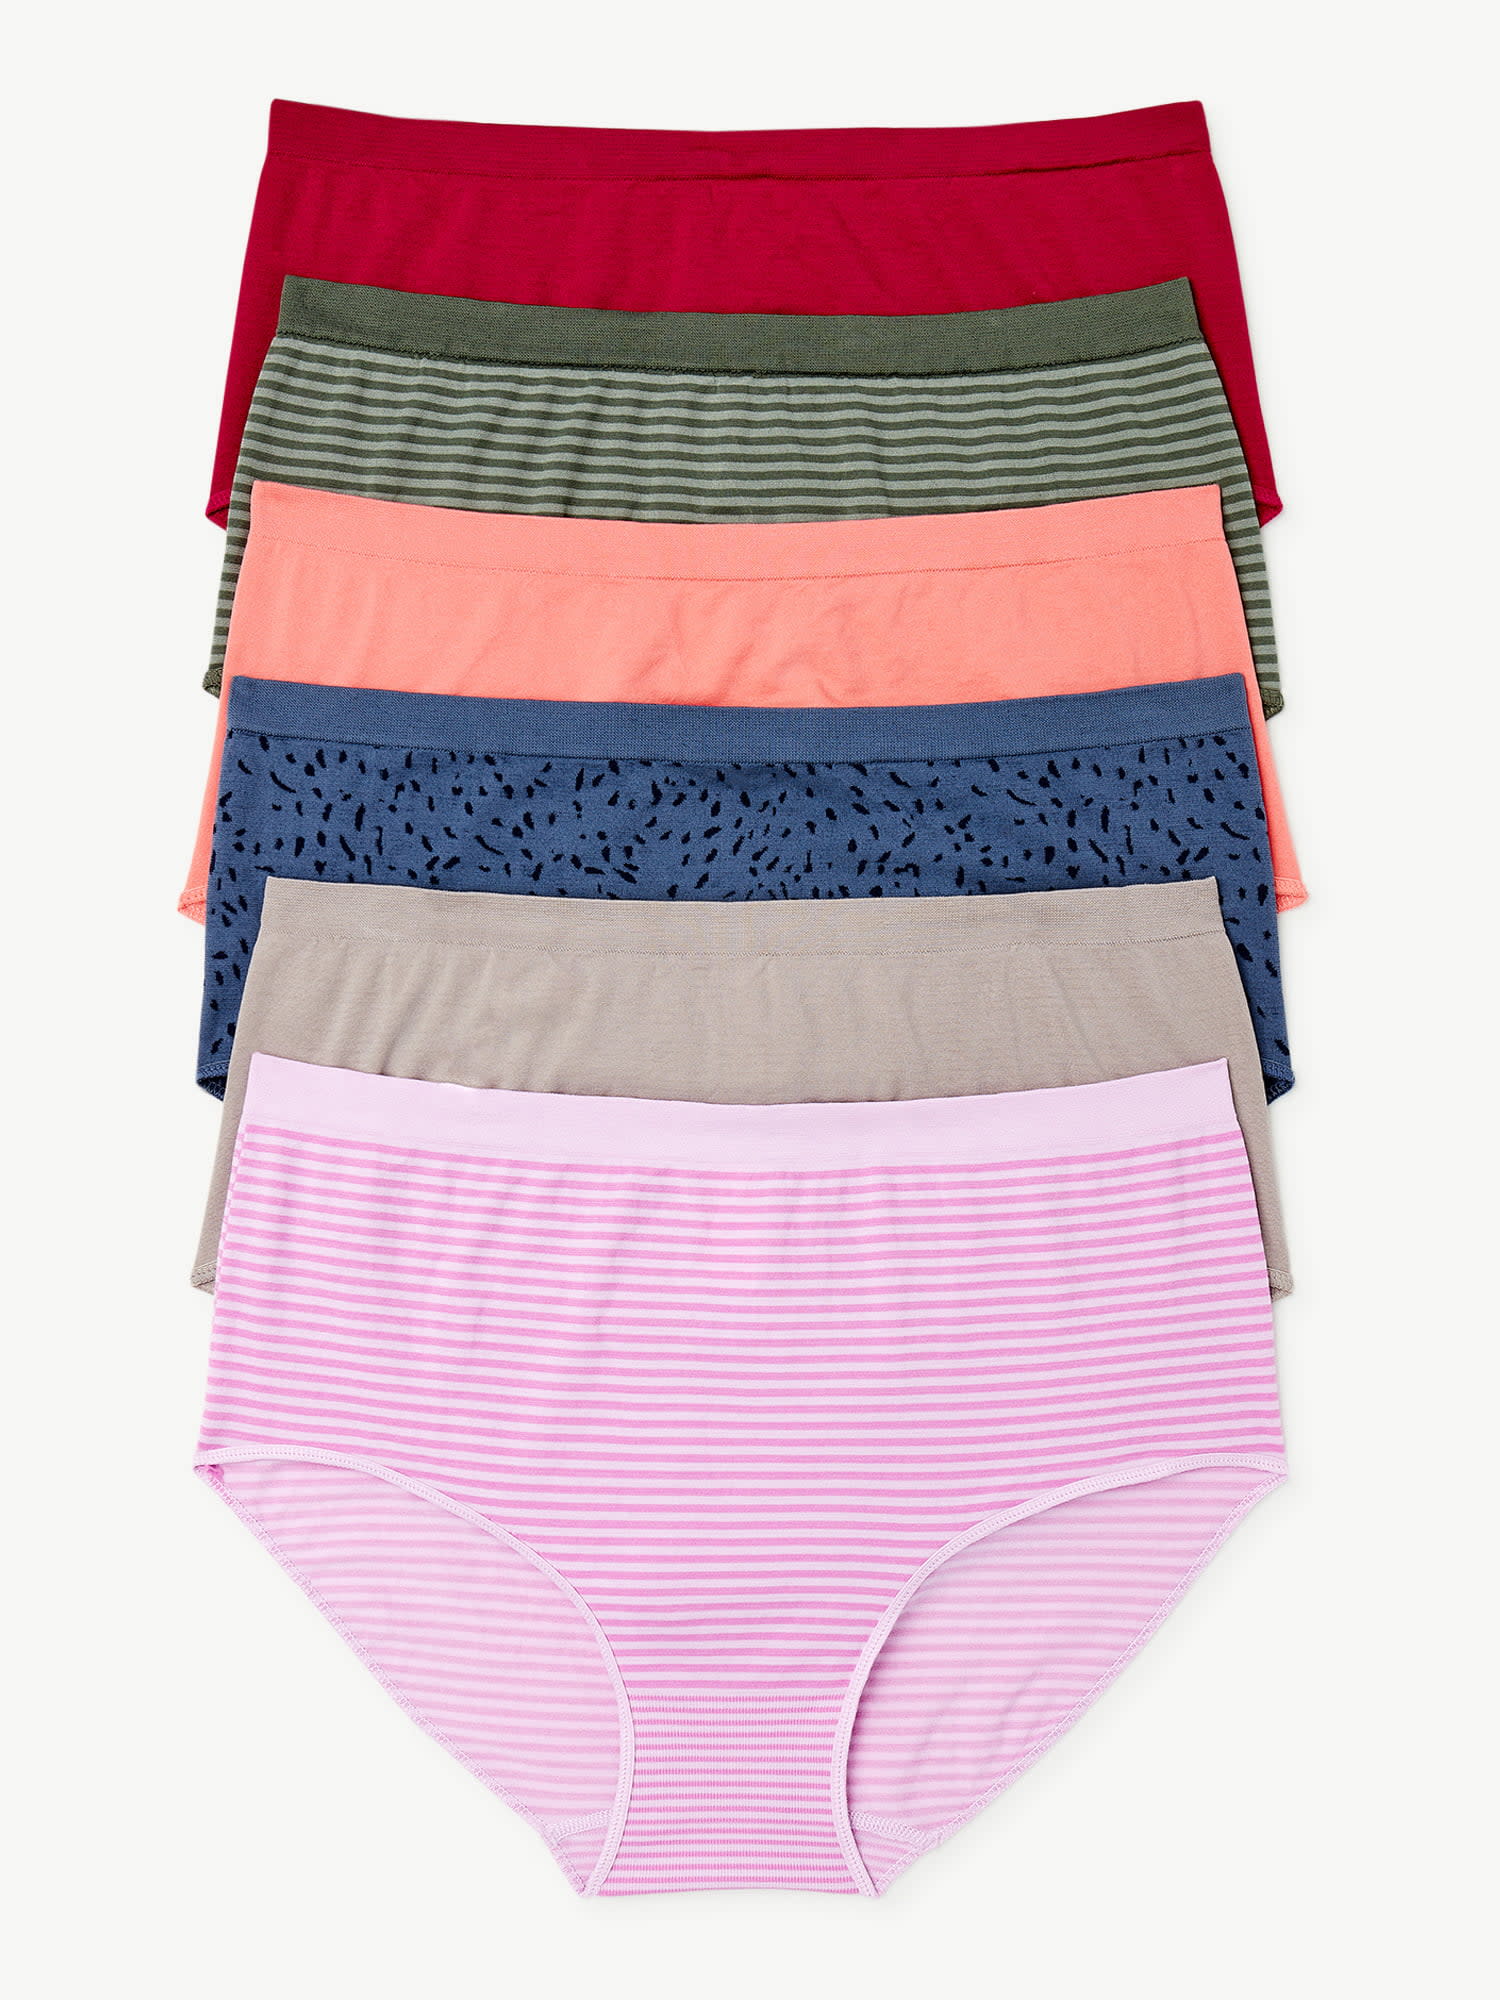 Buy Hanes Women's Cool Comfort Cotton Brief Underwear, 6-Pack